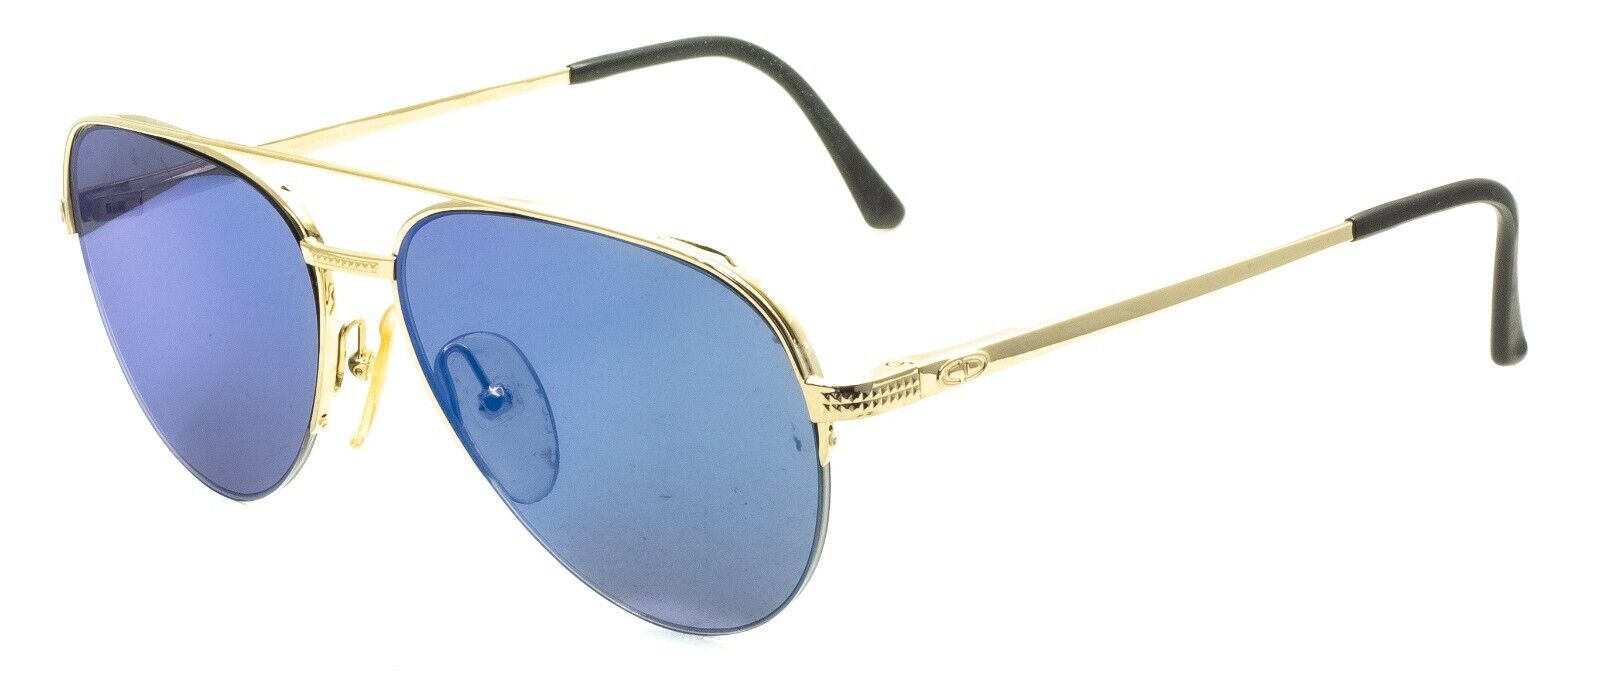 Dior 58MM Pilot Sunglasses on SALE  Saks OFF 5TH